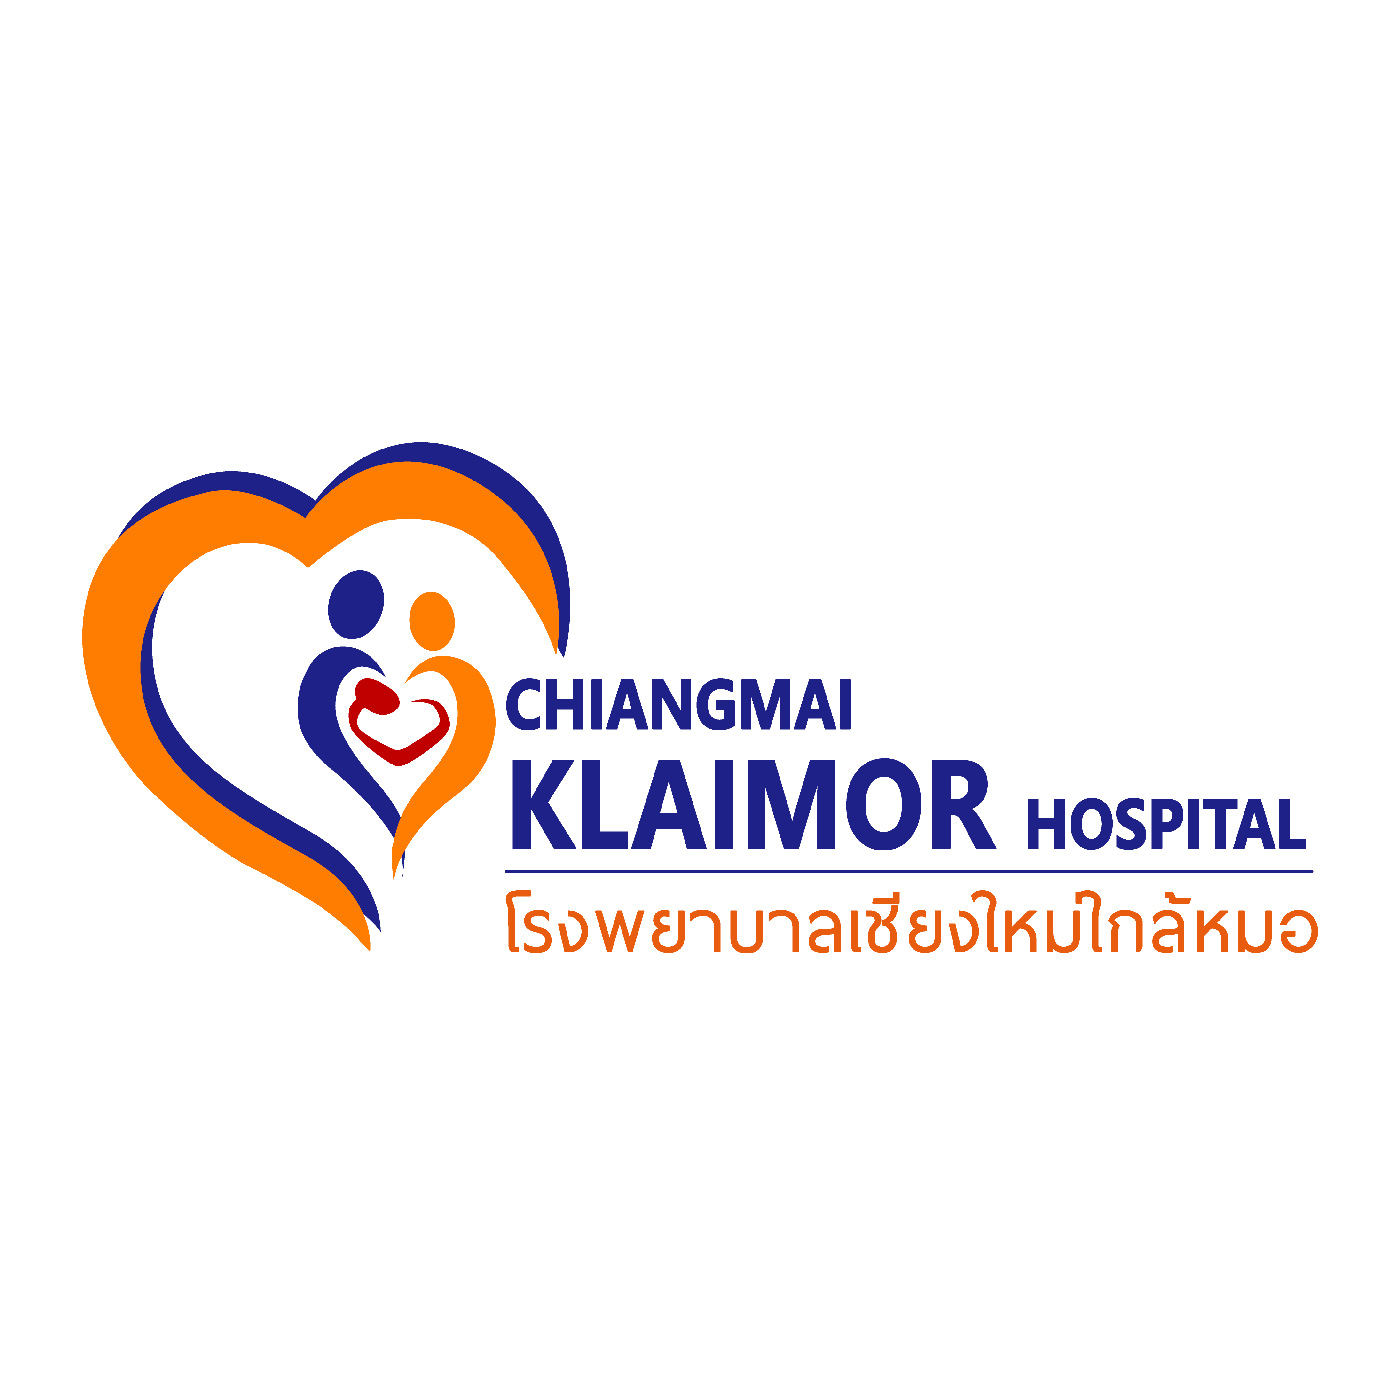 Chiangmai Klaimor Hospital 01